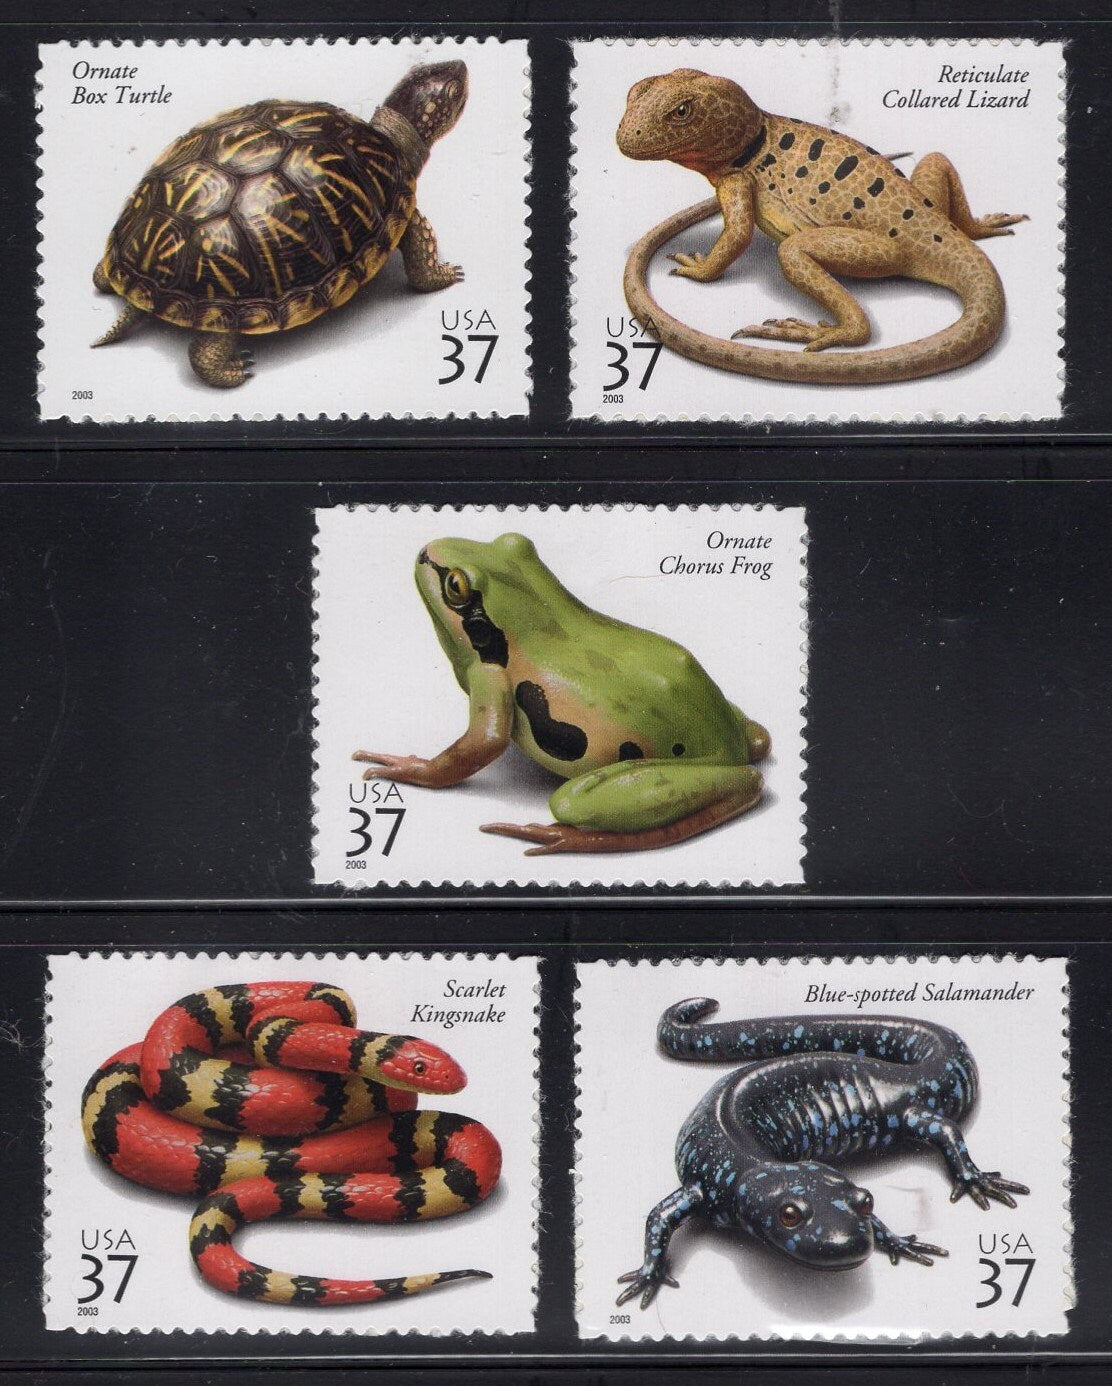 10 REPTILES inc TURTLE KINGSNAKE Frog Salamander Lizard (2 each) 37c Bright Fresh Stamps Issued in 2003 - s3814 -